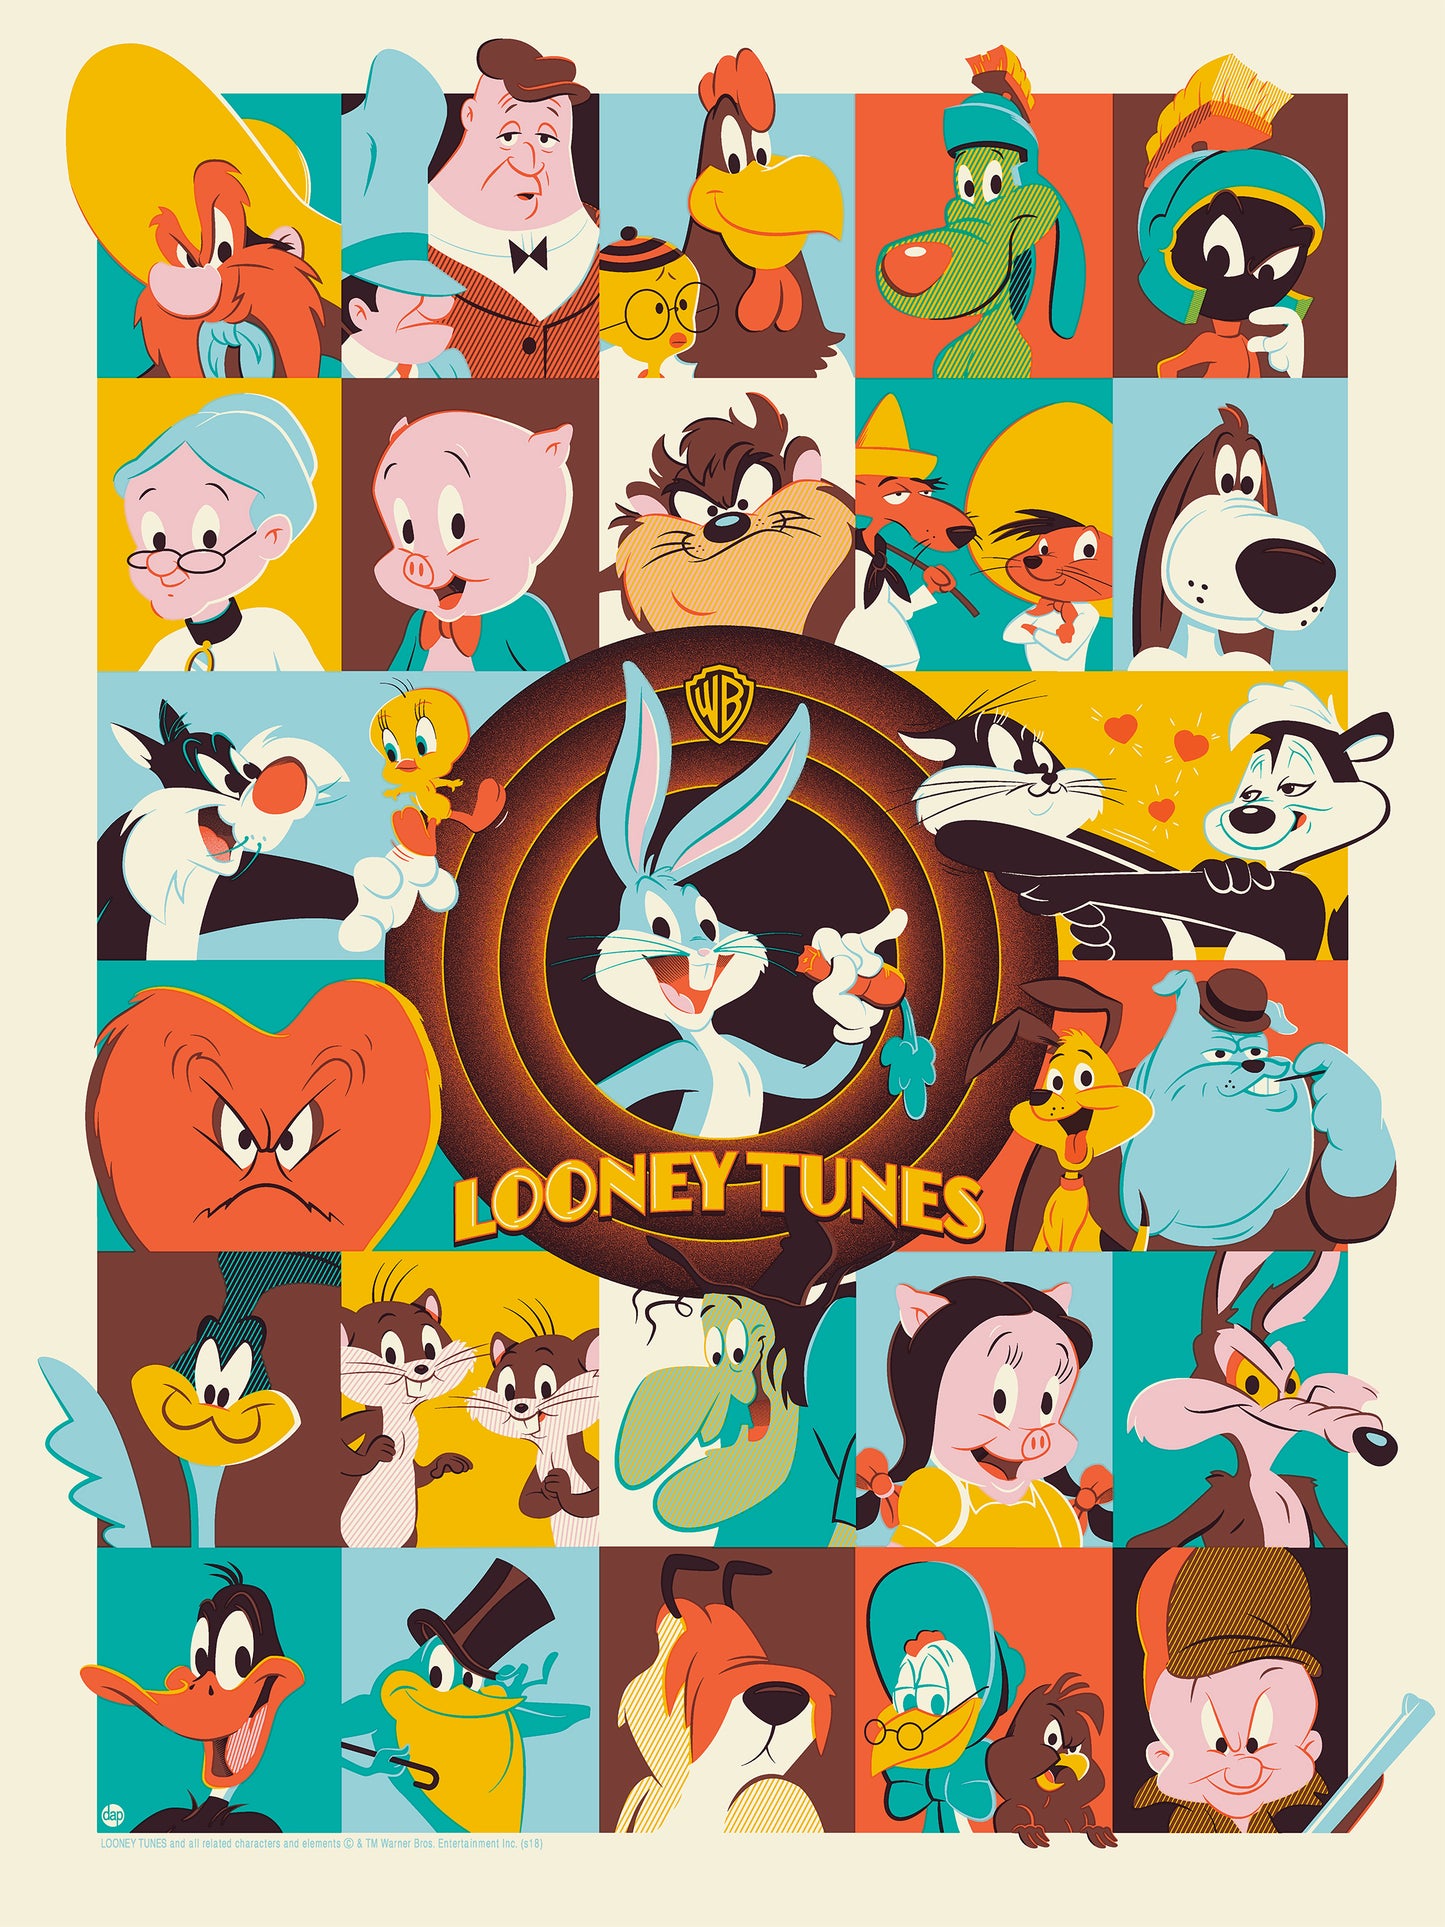 Dave Perillo "Looney Tunes"